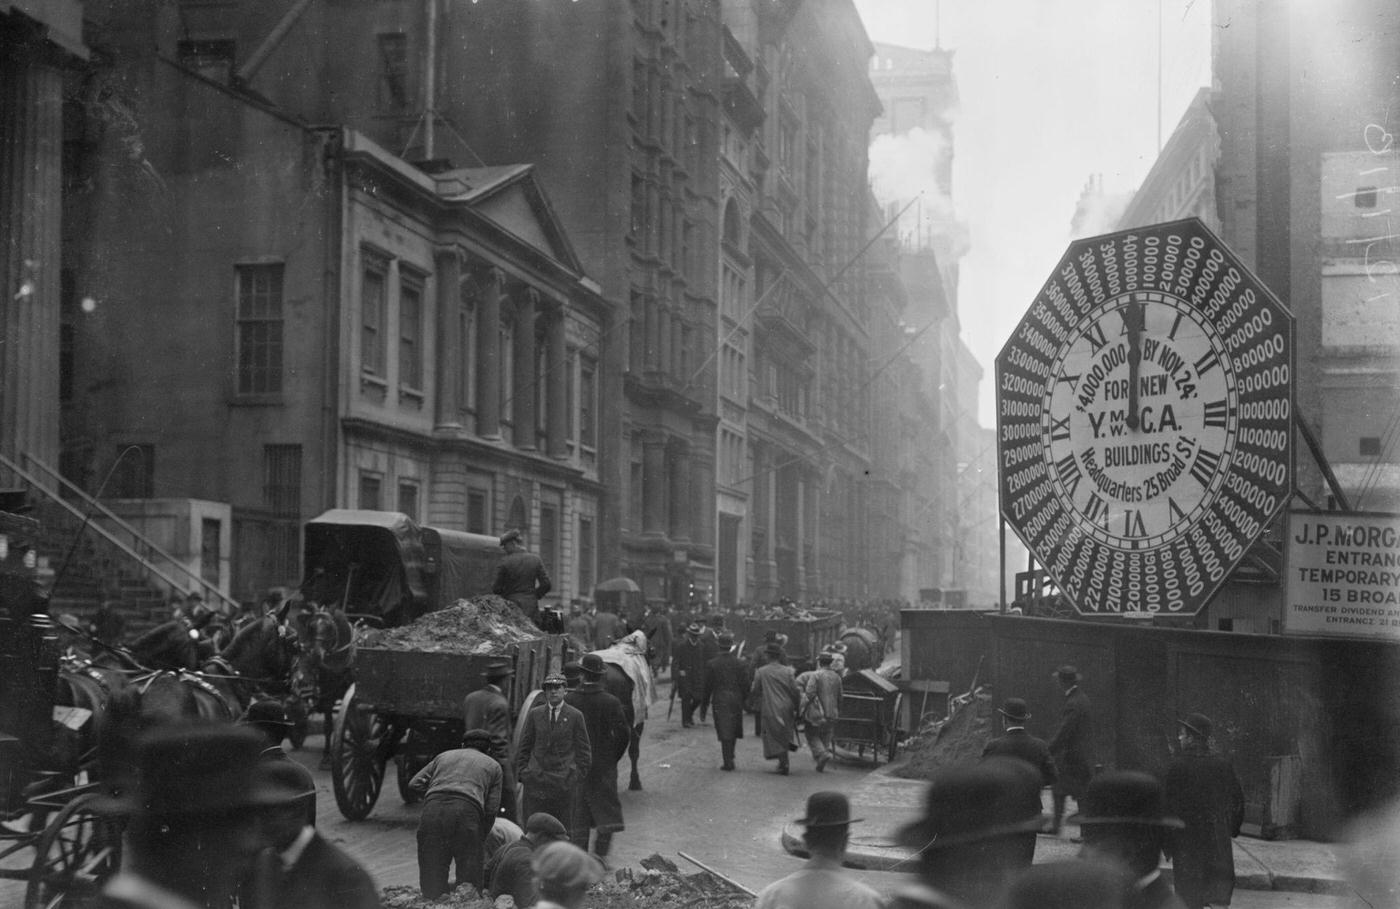 Wagons On Manhattan Streets By Ymca Clock Sign, New York City, Circa 1900